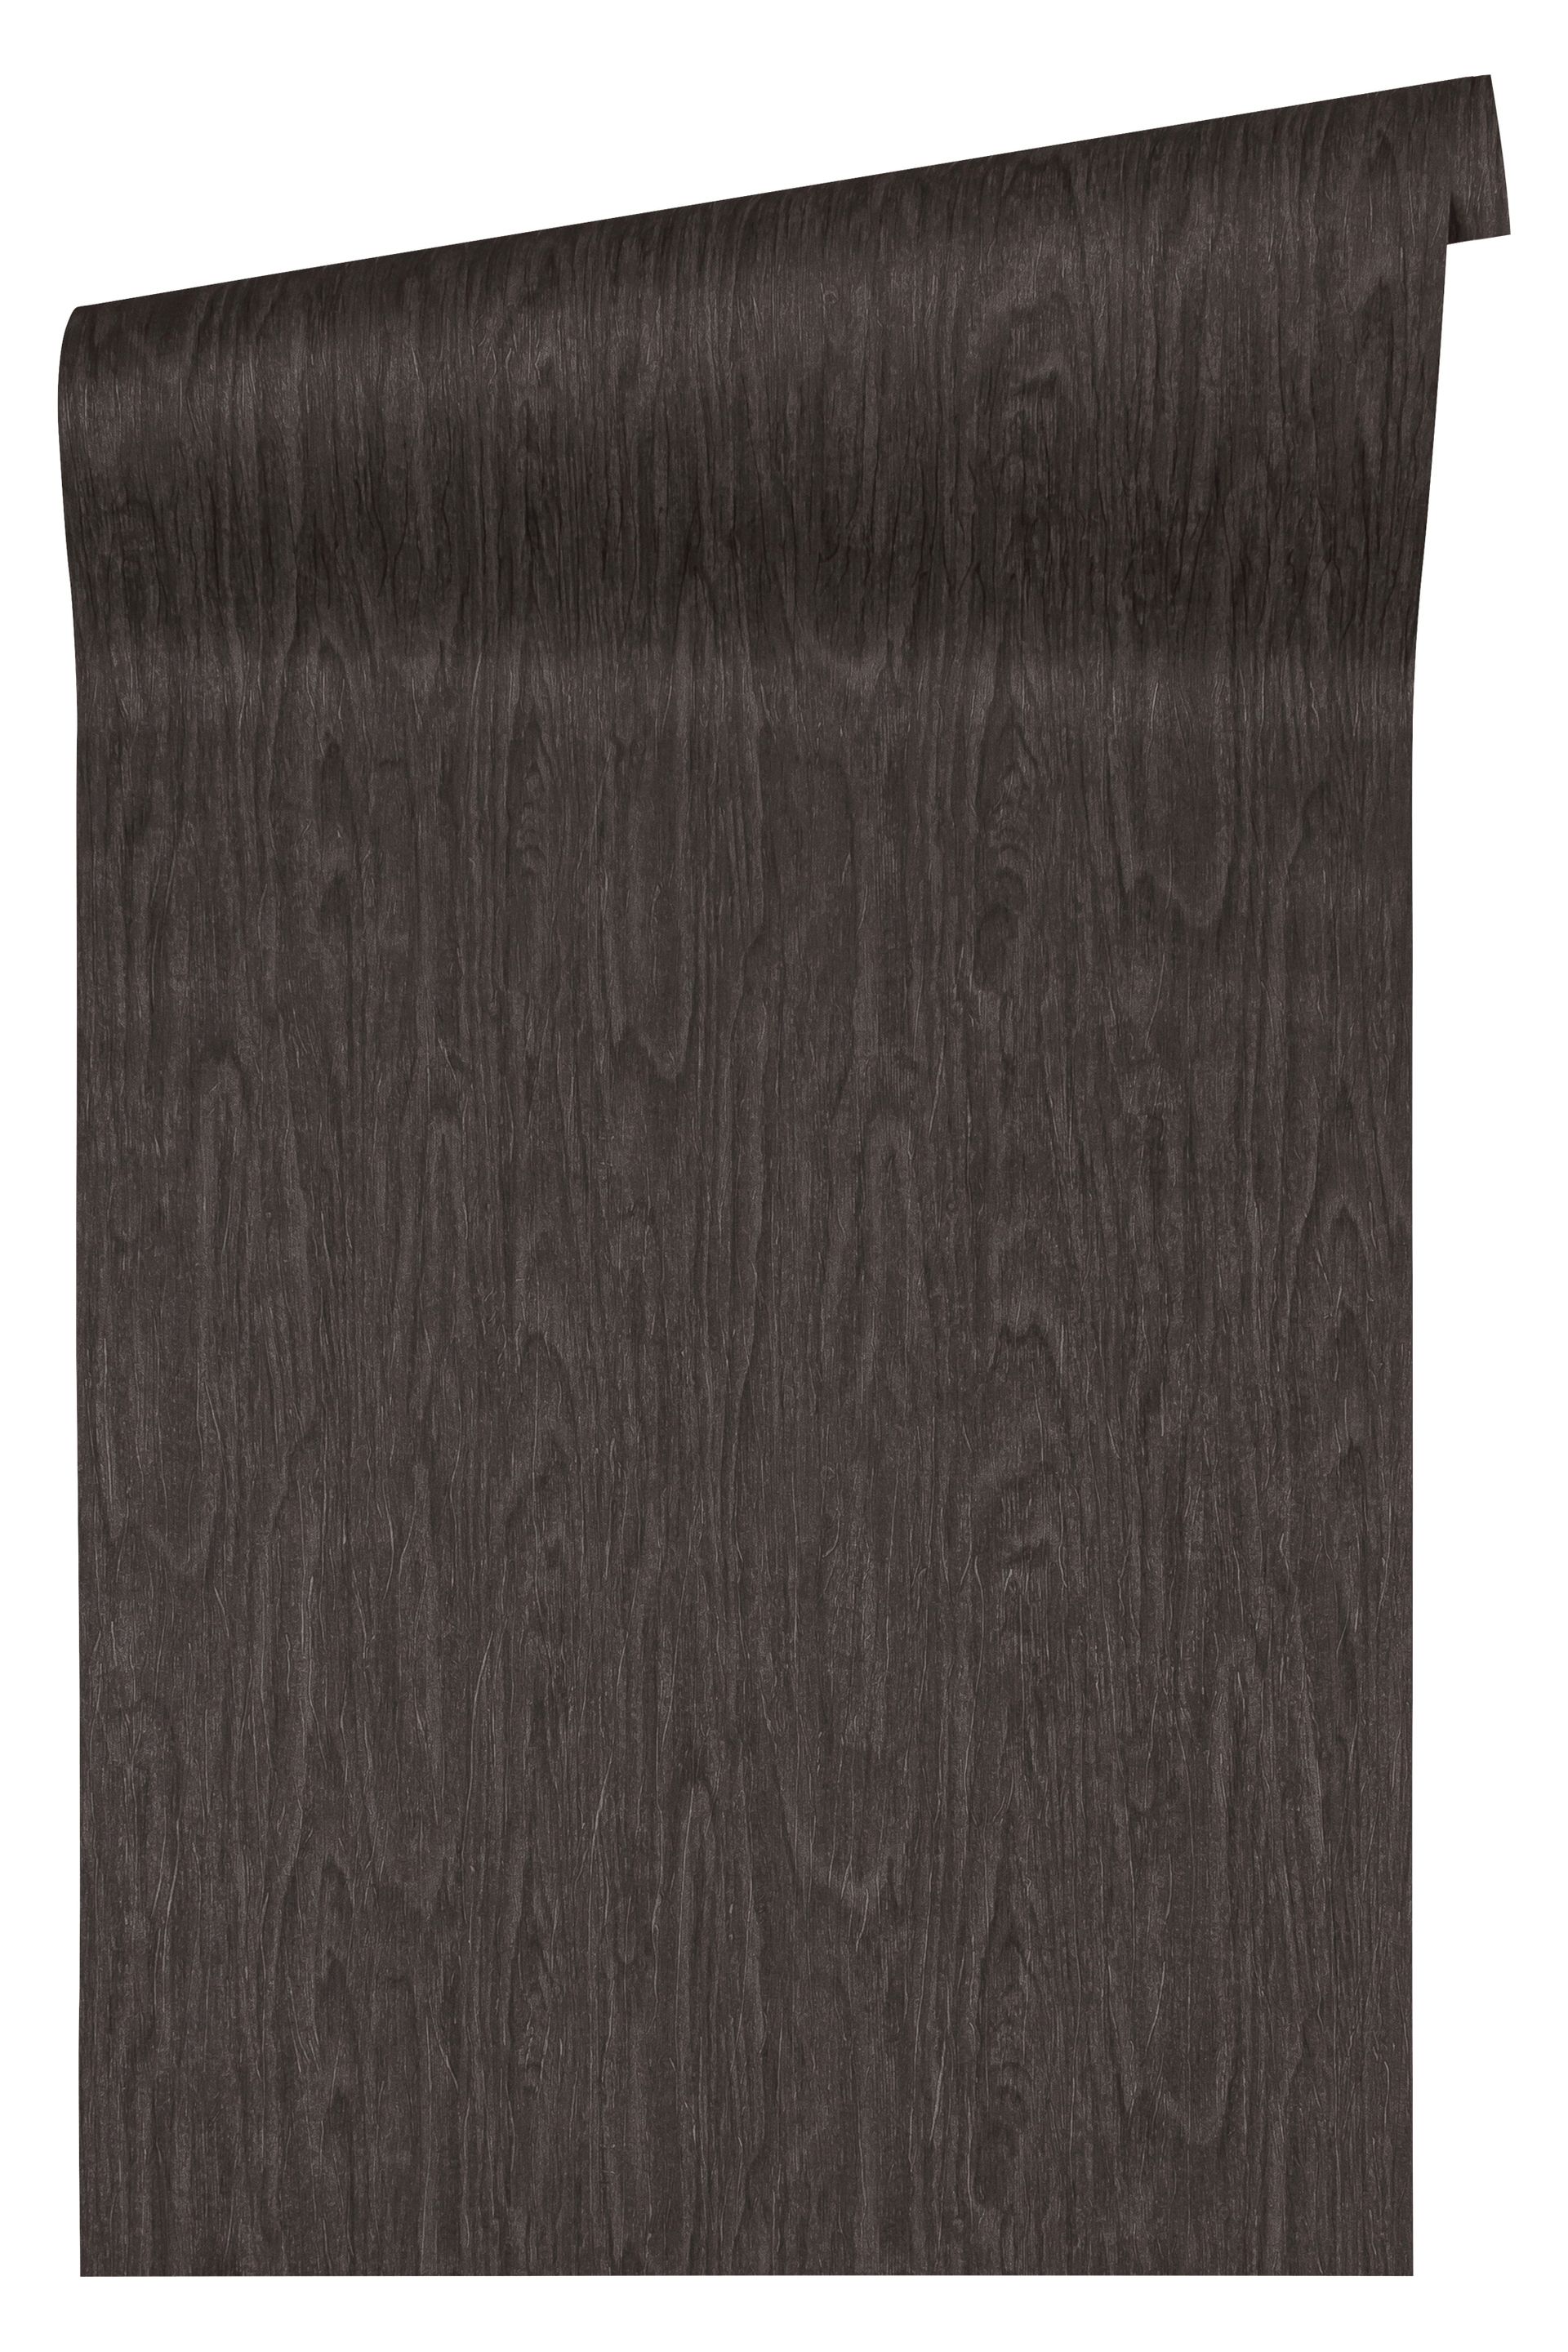 Versace wallpaper Versace 4, Tapete in Holzoptik, grau, schwarz 370524